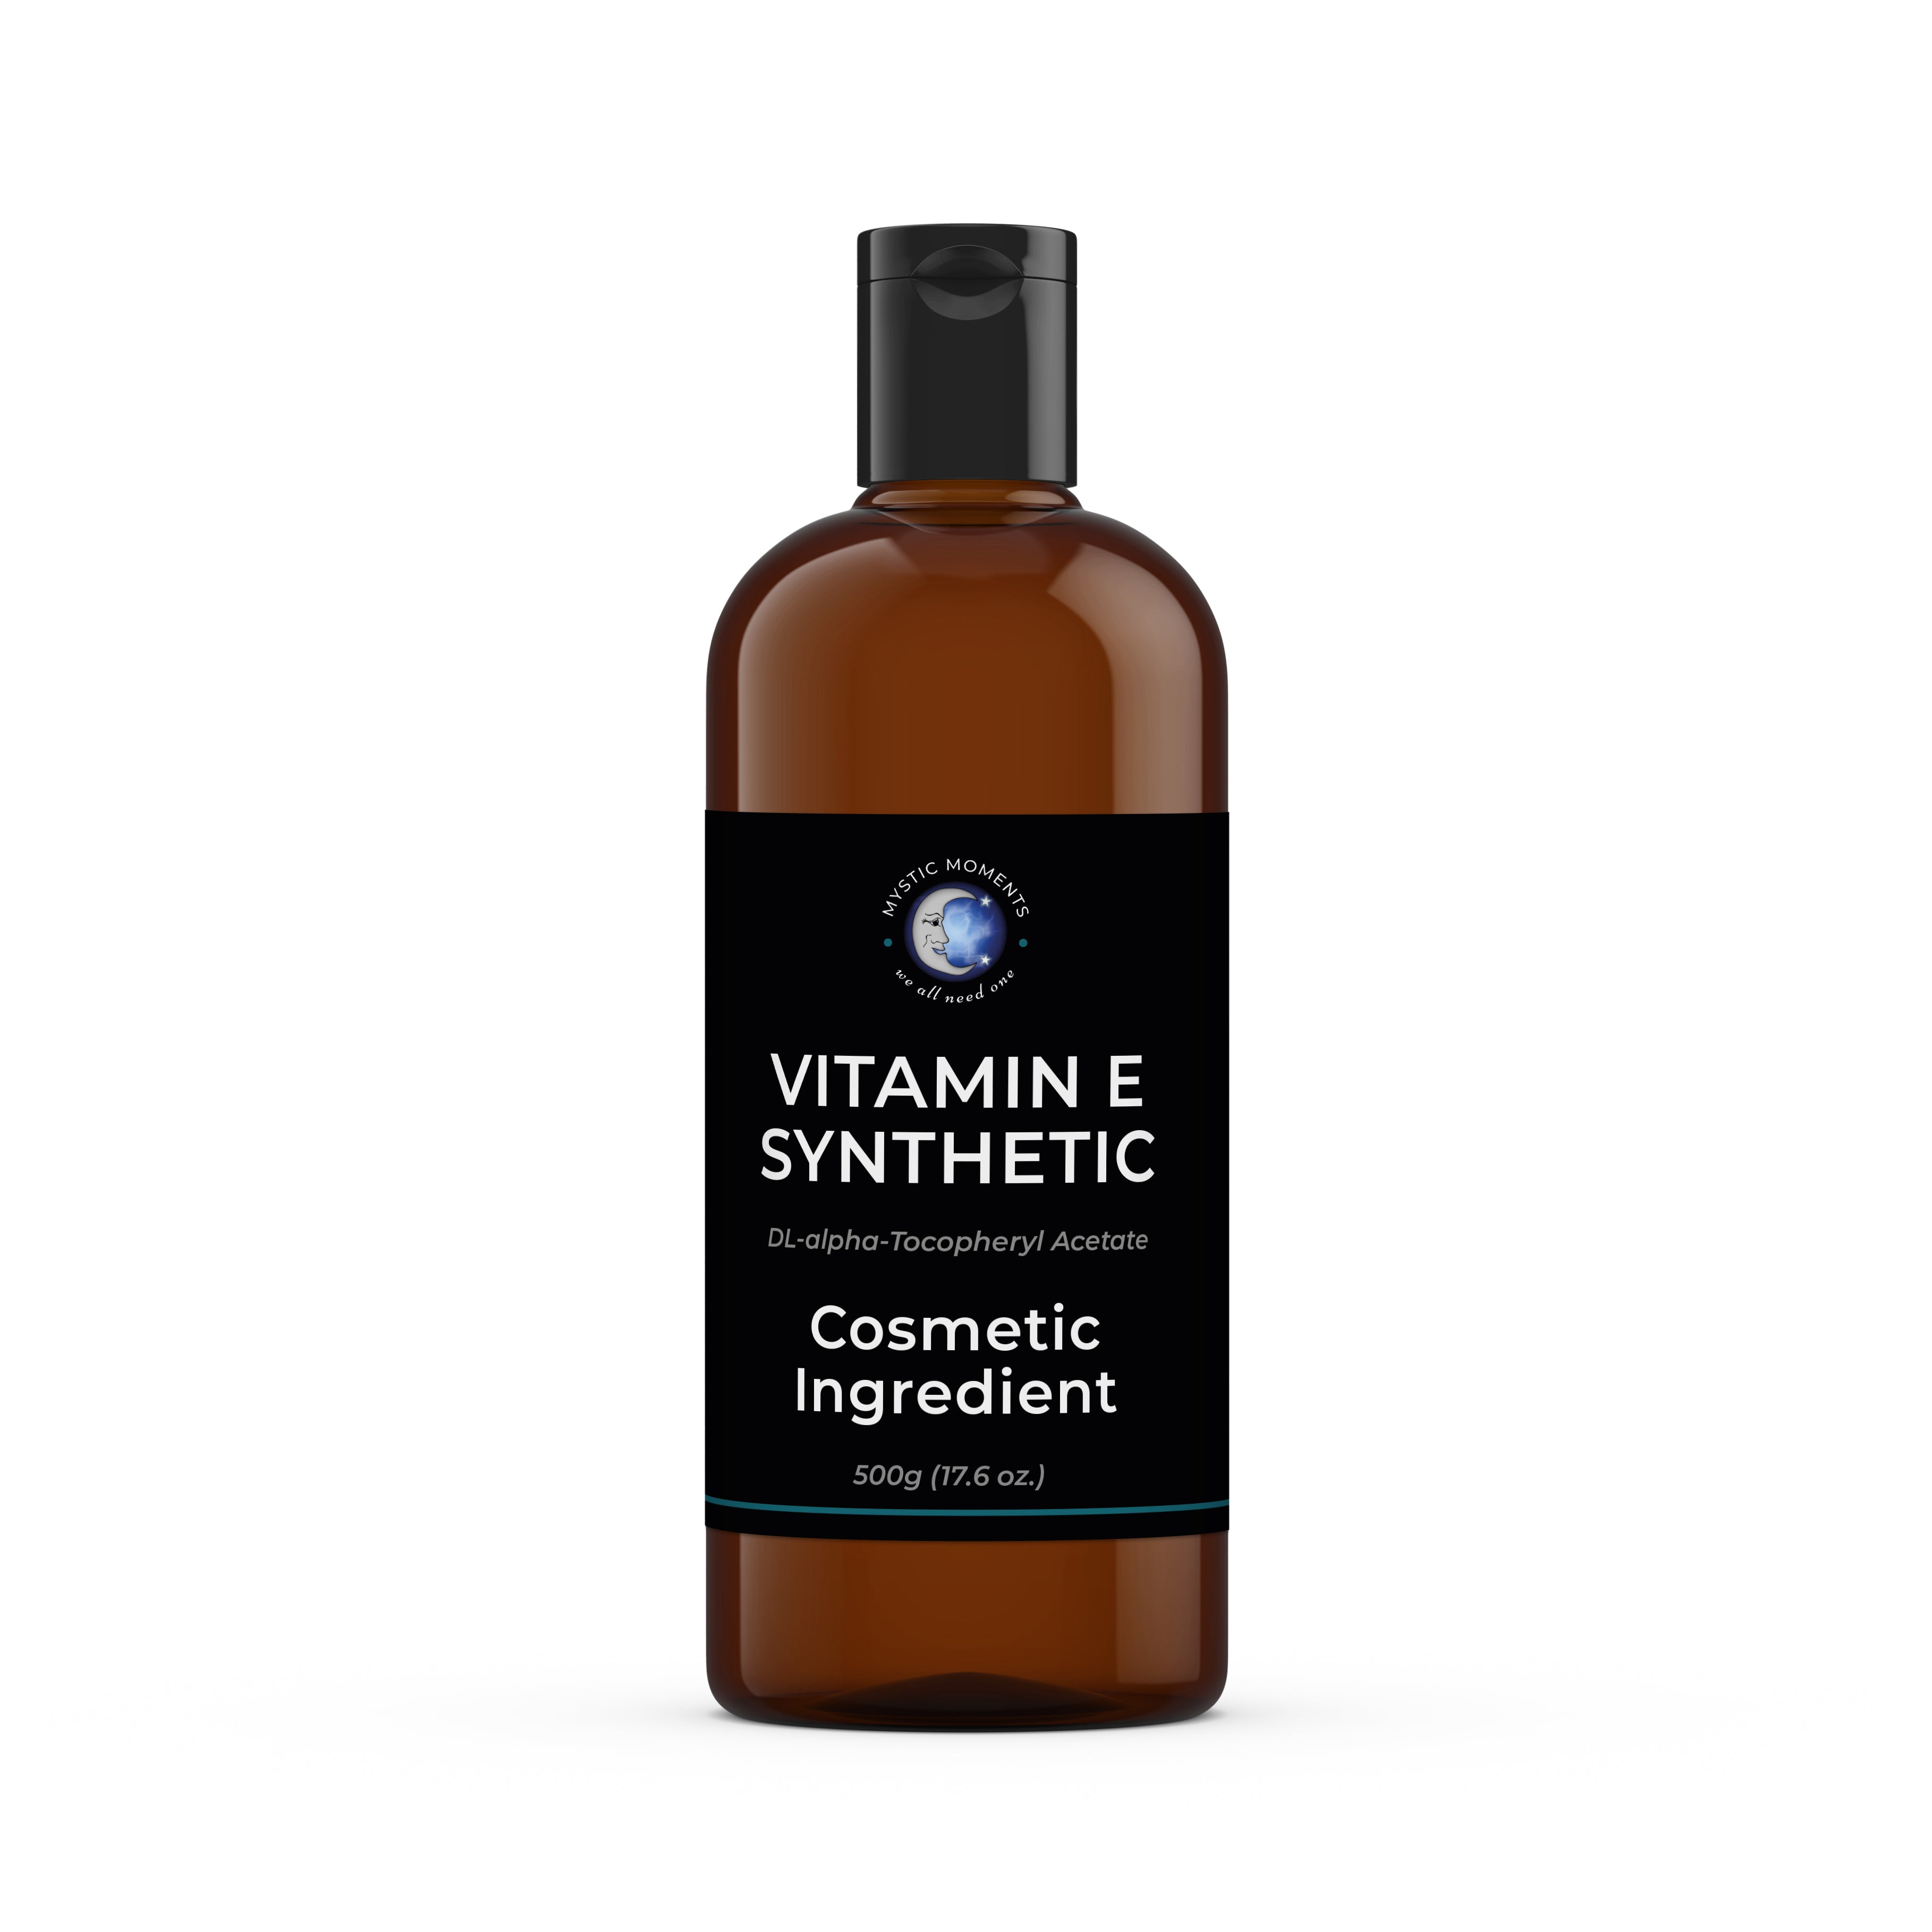 Vitamin E Synthetic - Vitamins